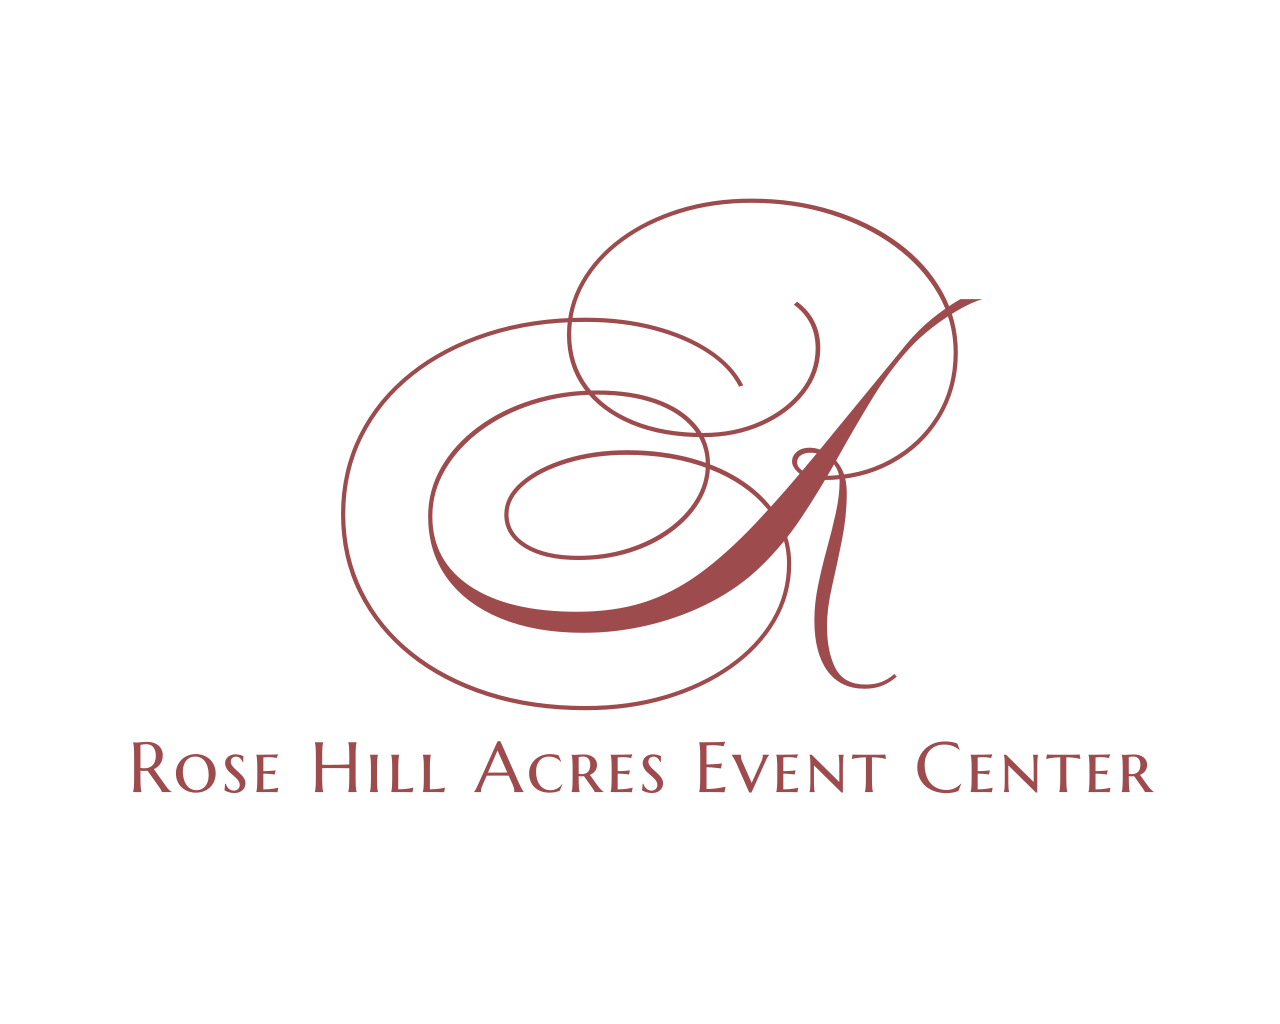 Rose Hill Acres Event Center